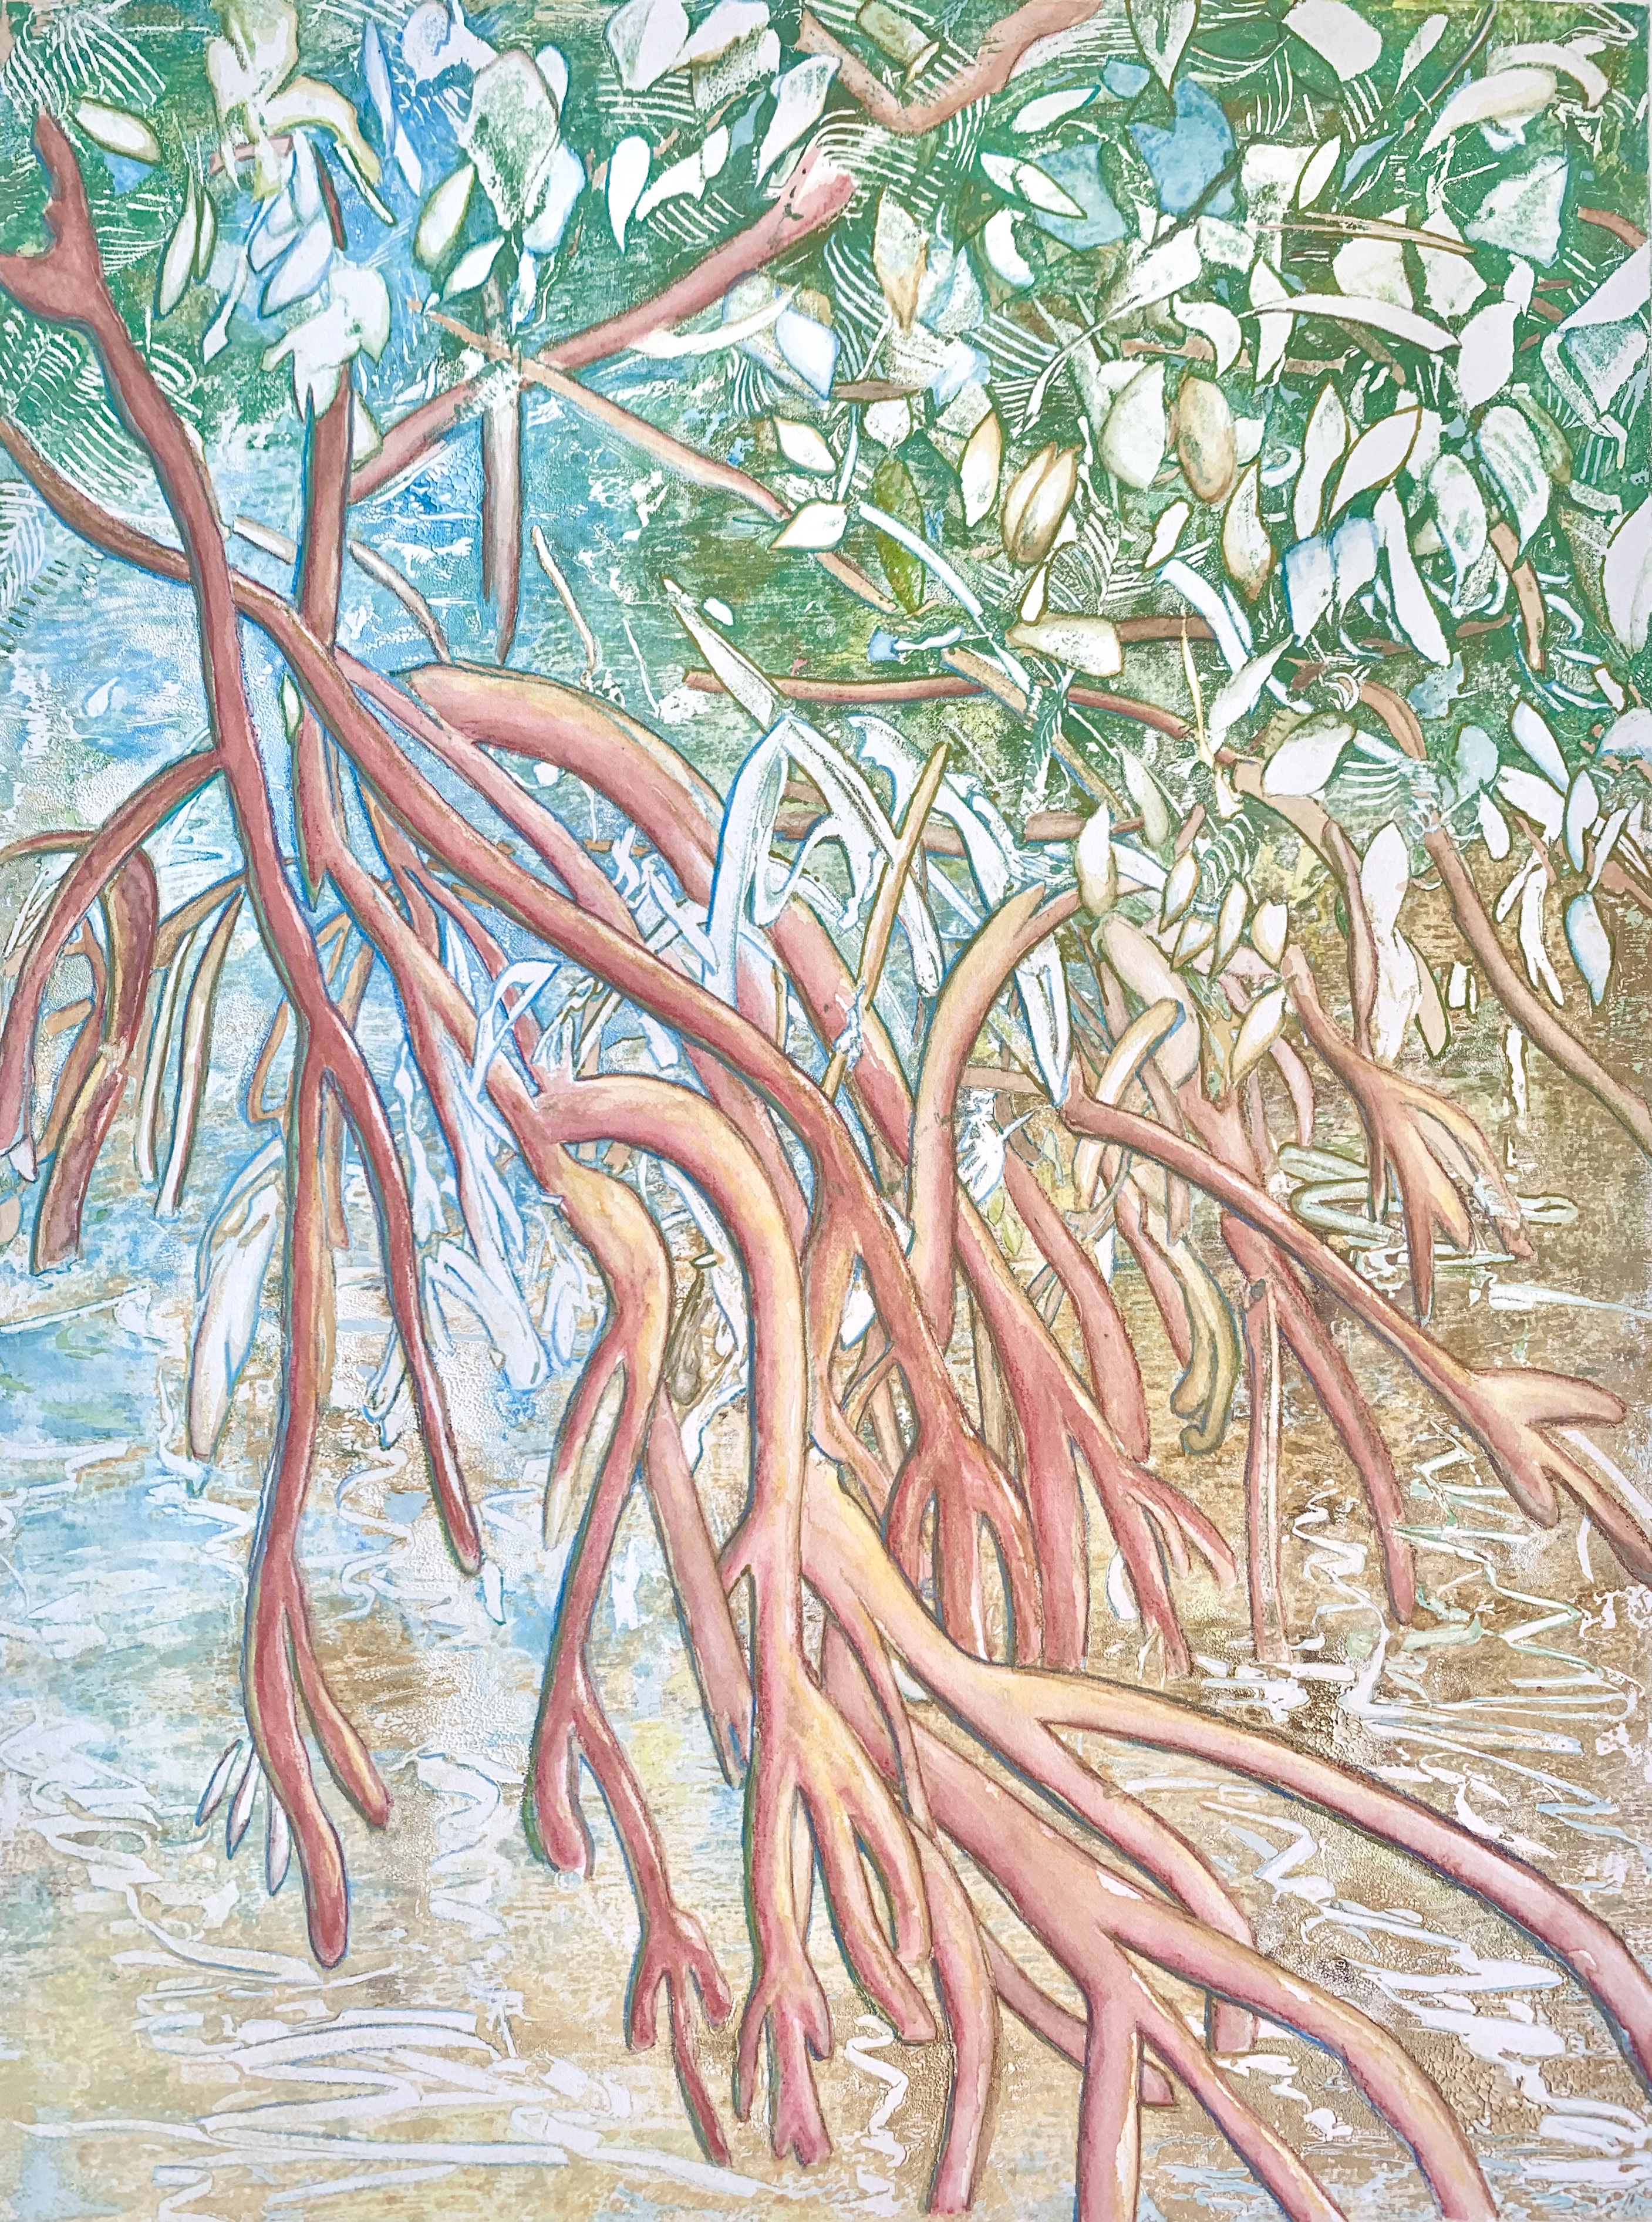 Red Mangroves image